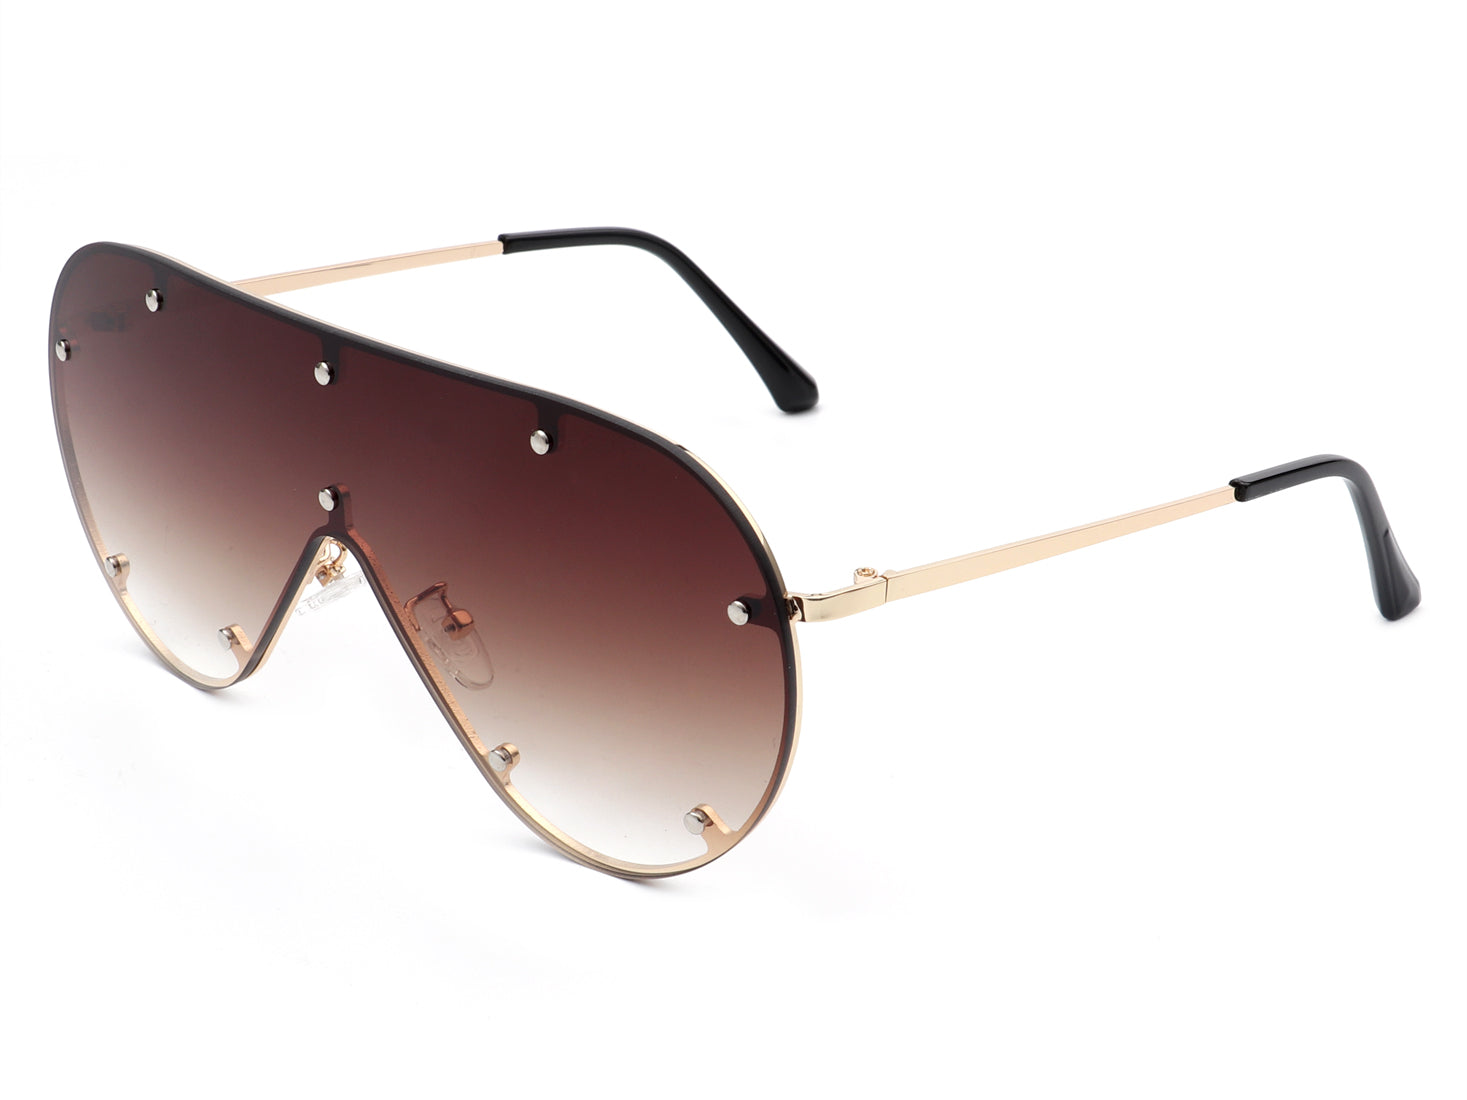 HW3006 - Retro Oversize Aviator Tinted Fashion Sunglasses